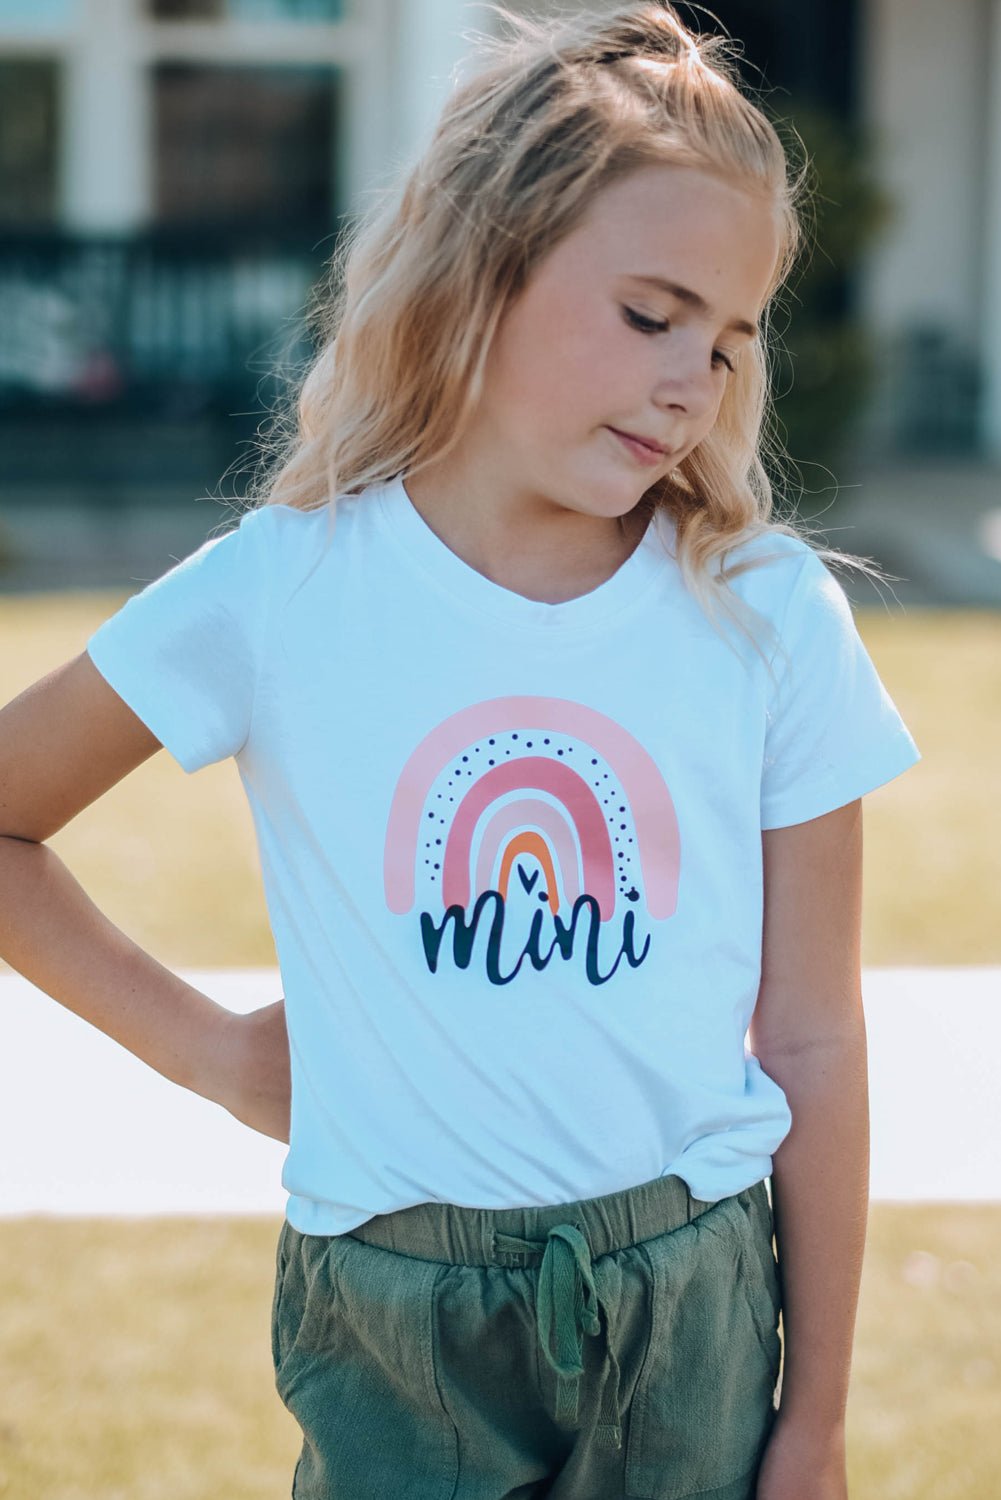 Girls Graphic Round Neck Tee Shirt - Fashion Girl Online Store